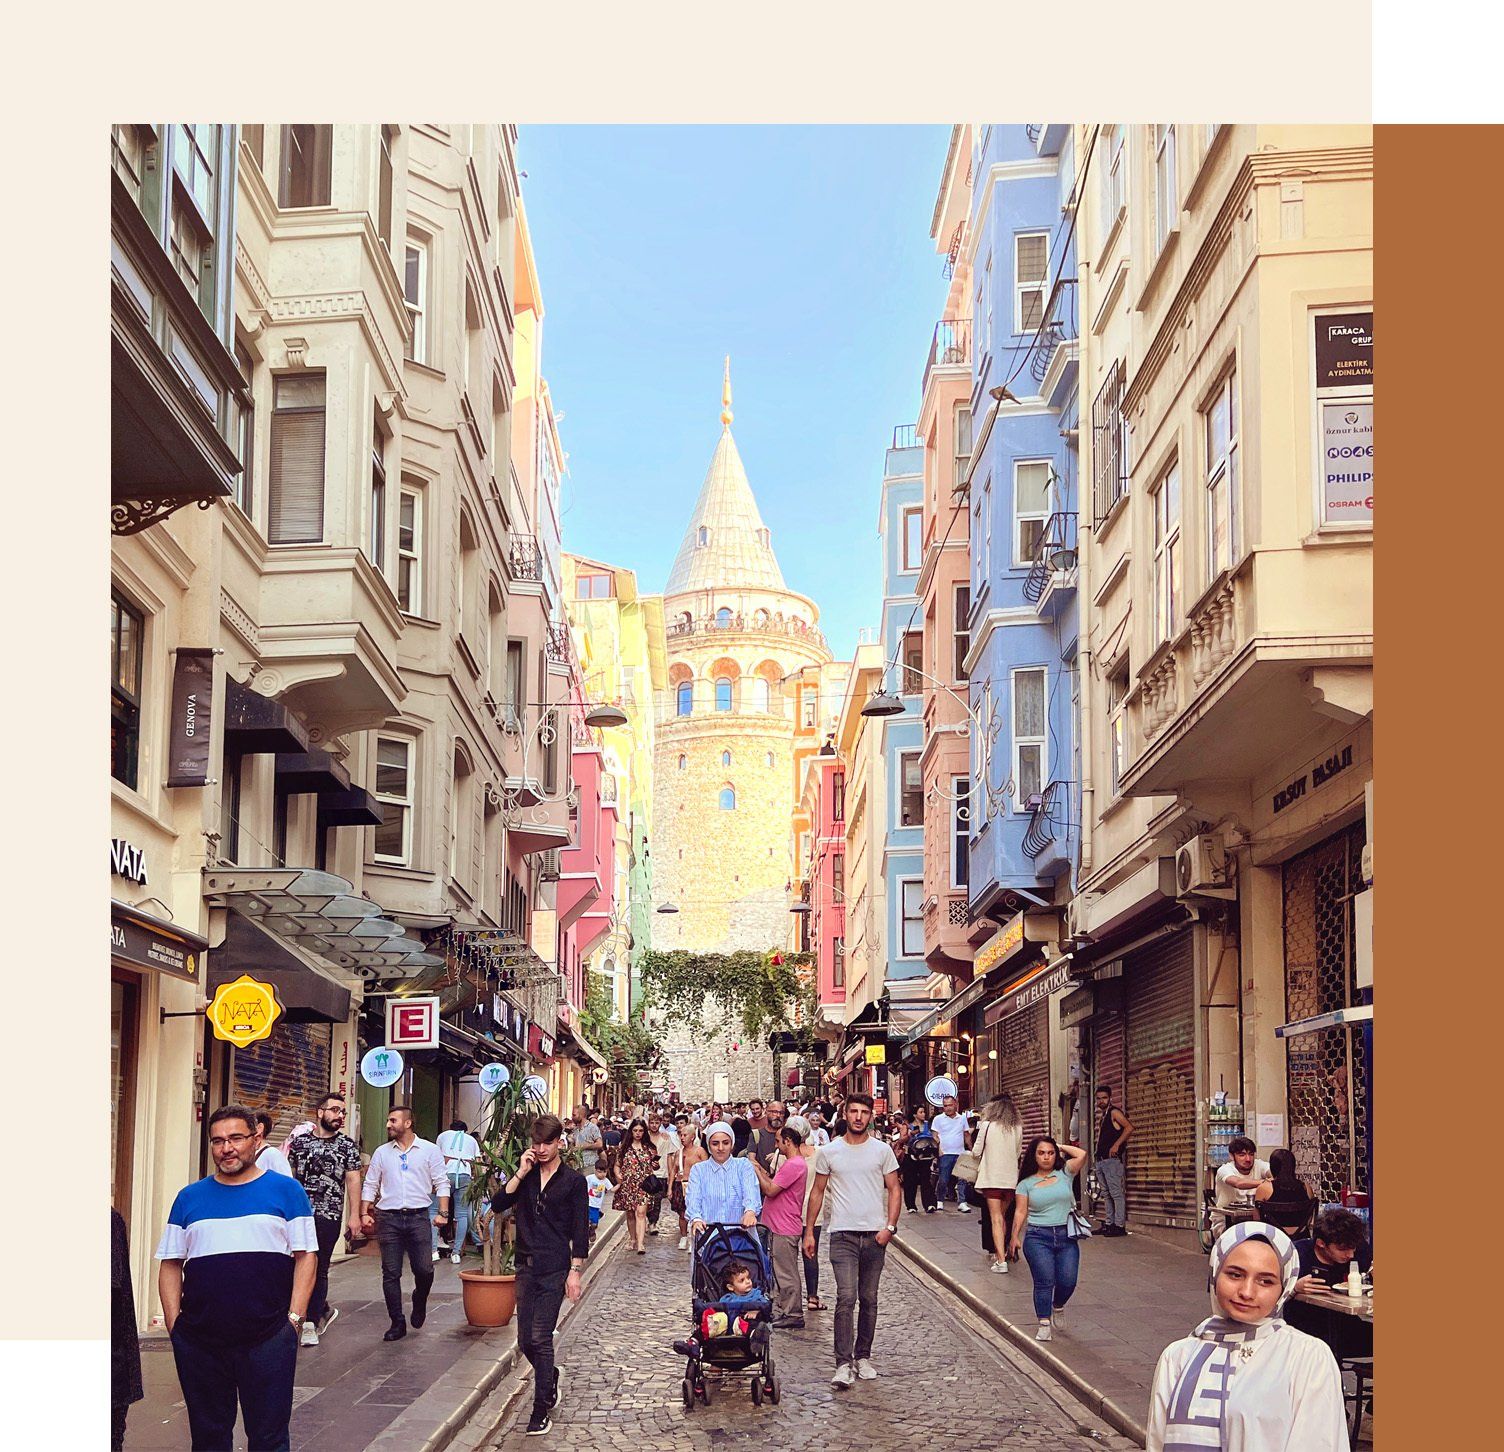 pedestrians-walk-street-view-galata-kulesi-tower-istanbul